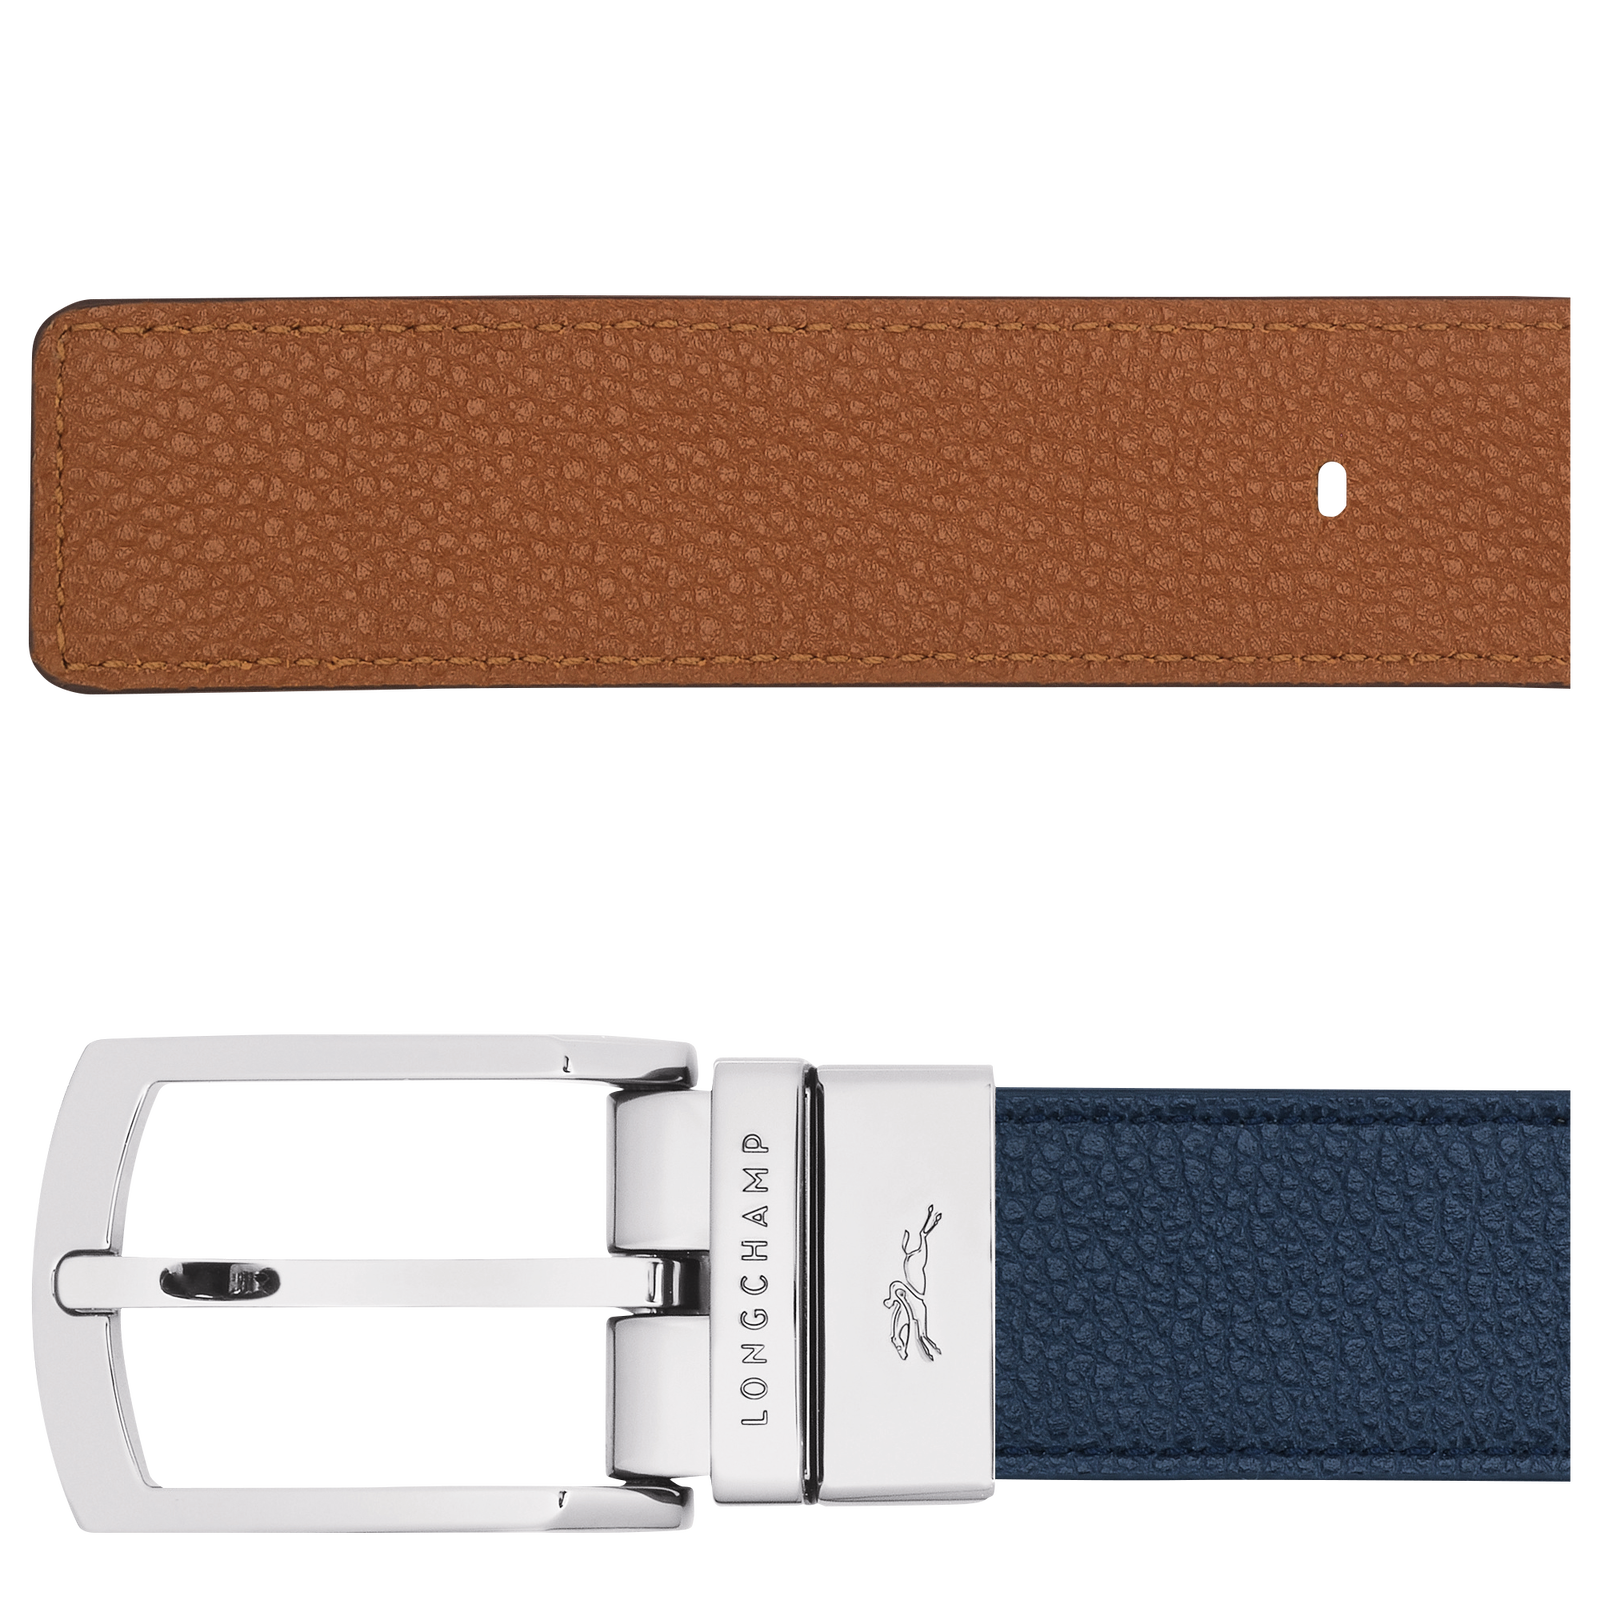 Le Foulonné Men's belt, Navy/Caramel